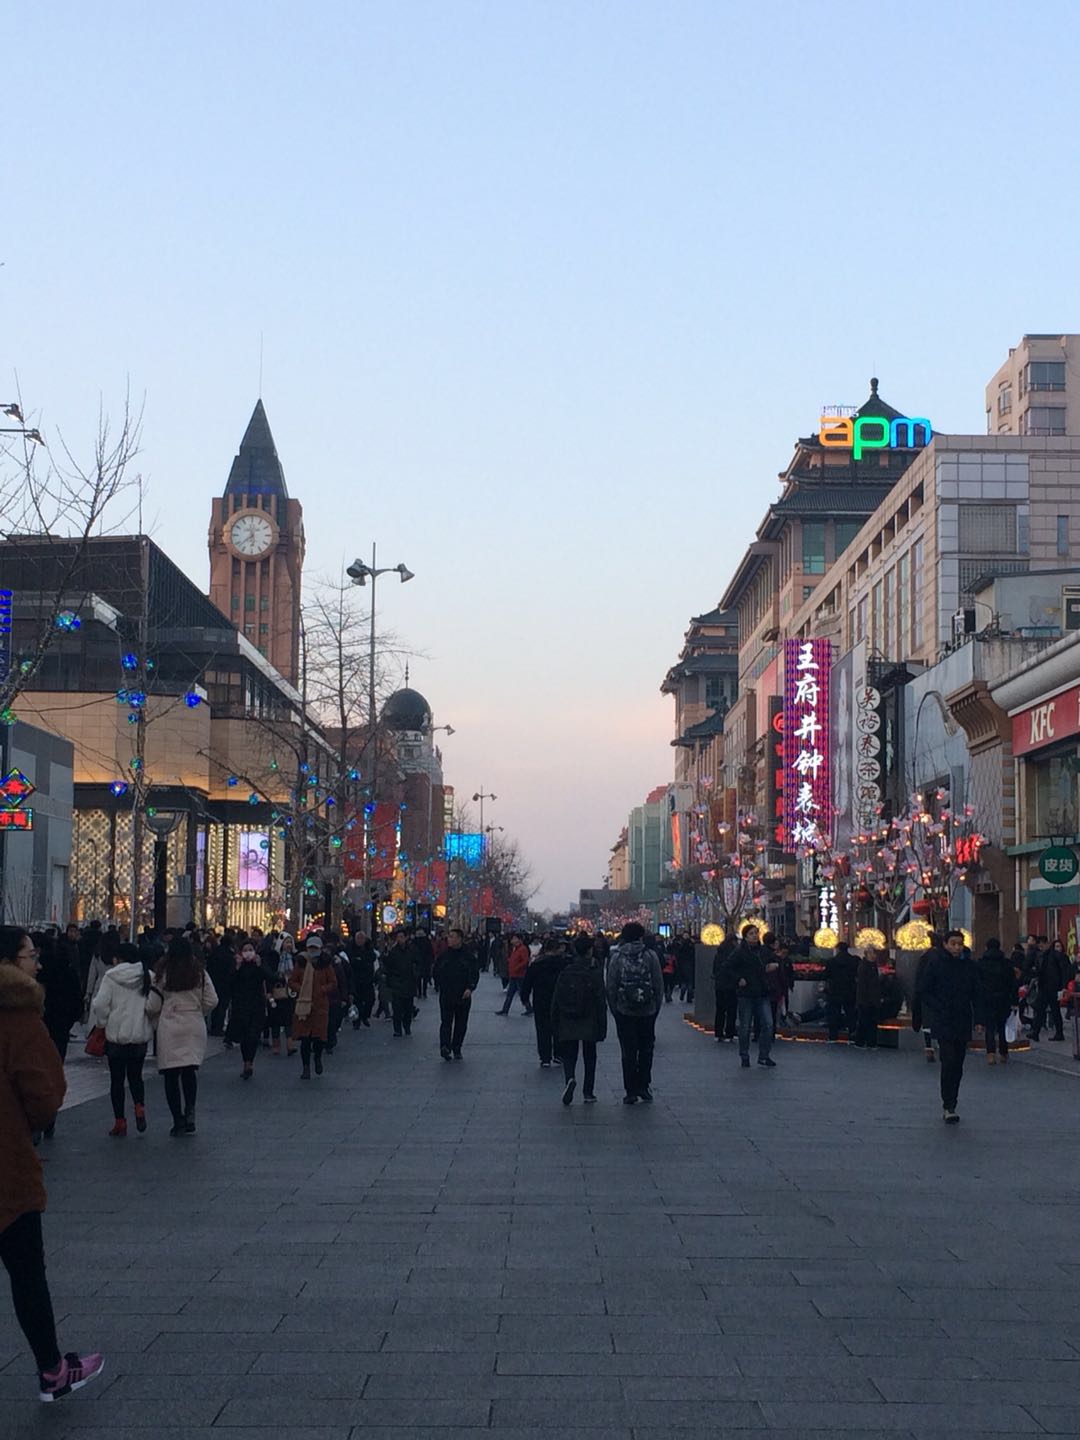 Shoppingstreet No.1 in Peking